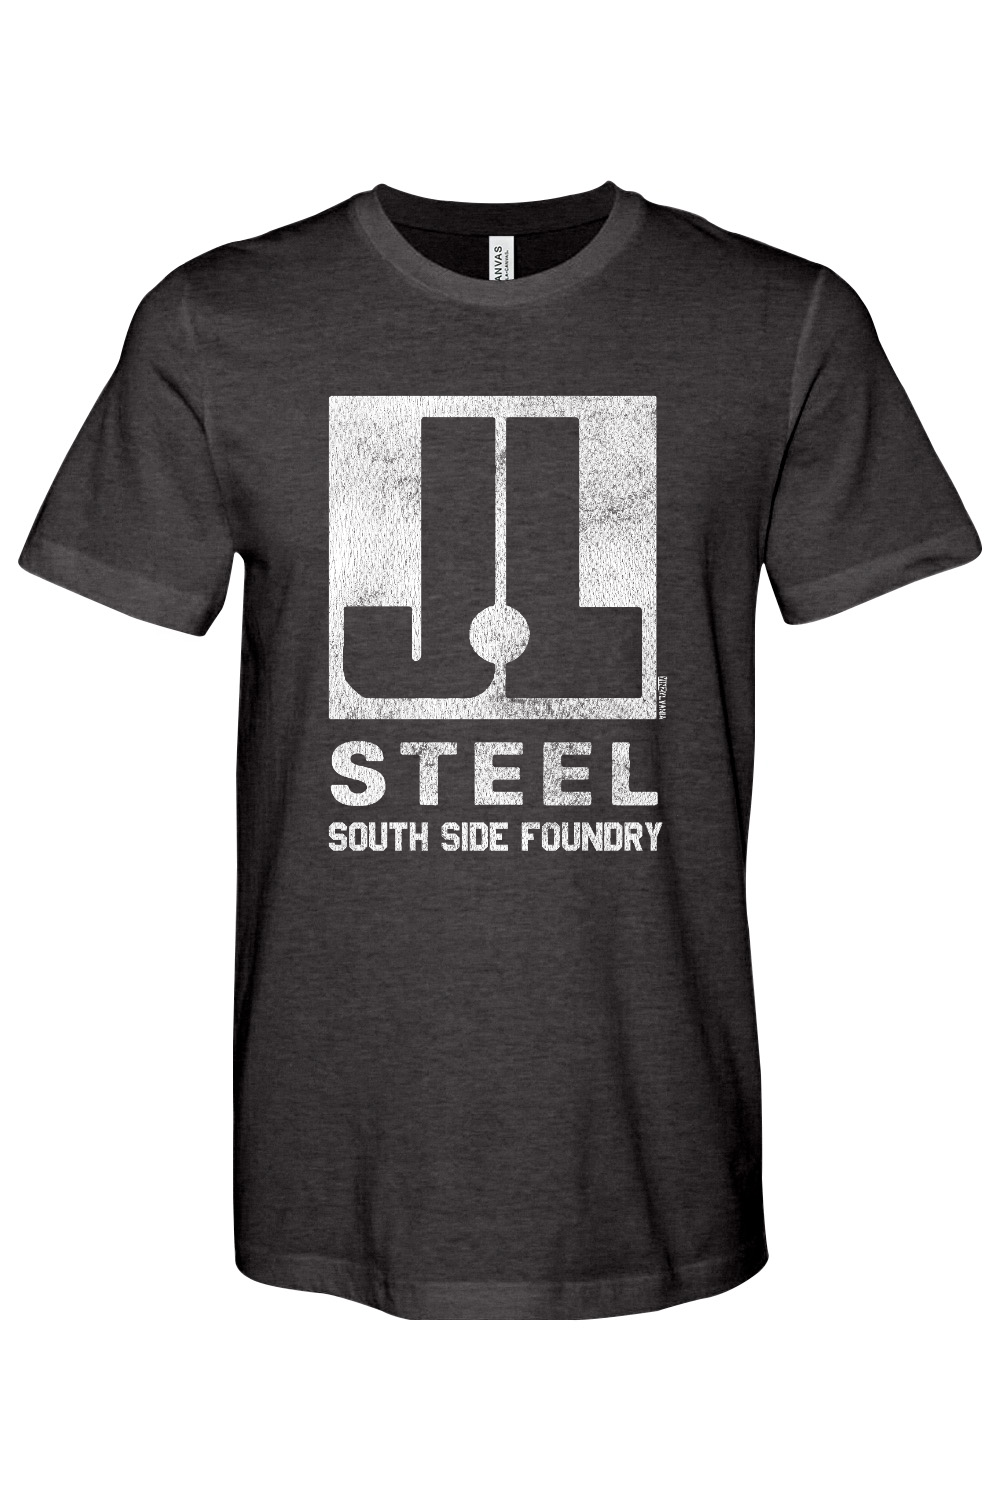 J&L Steel - South Side Foundry - Bella + Canvas Jersey Tee - Yinzylvania